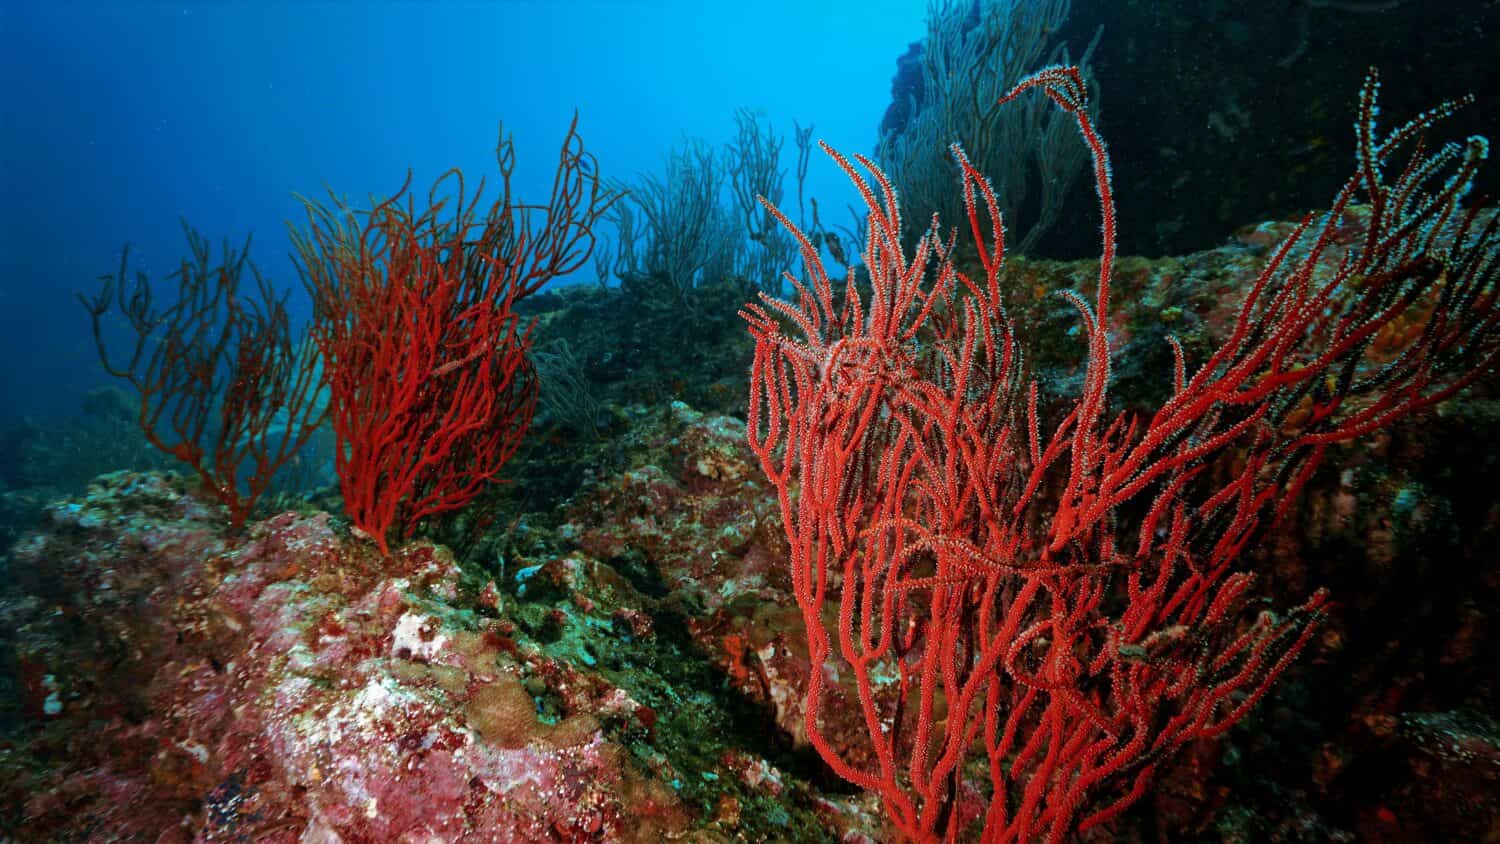 Underwater landscape with fire corals. 